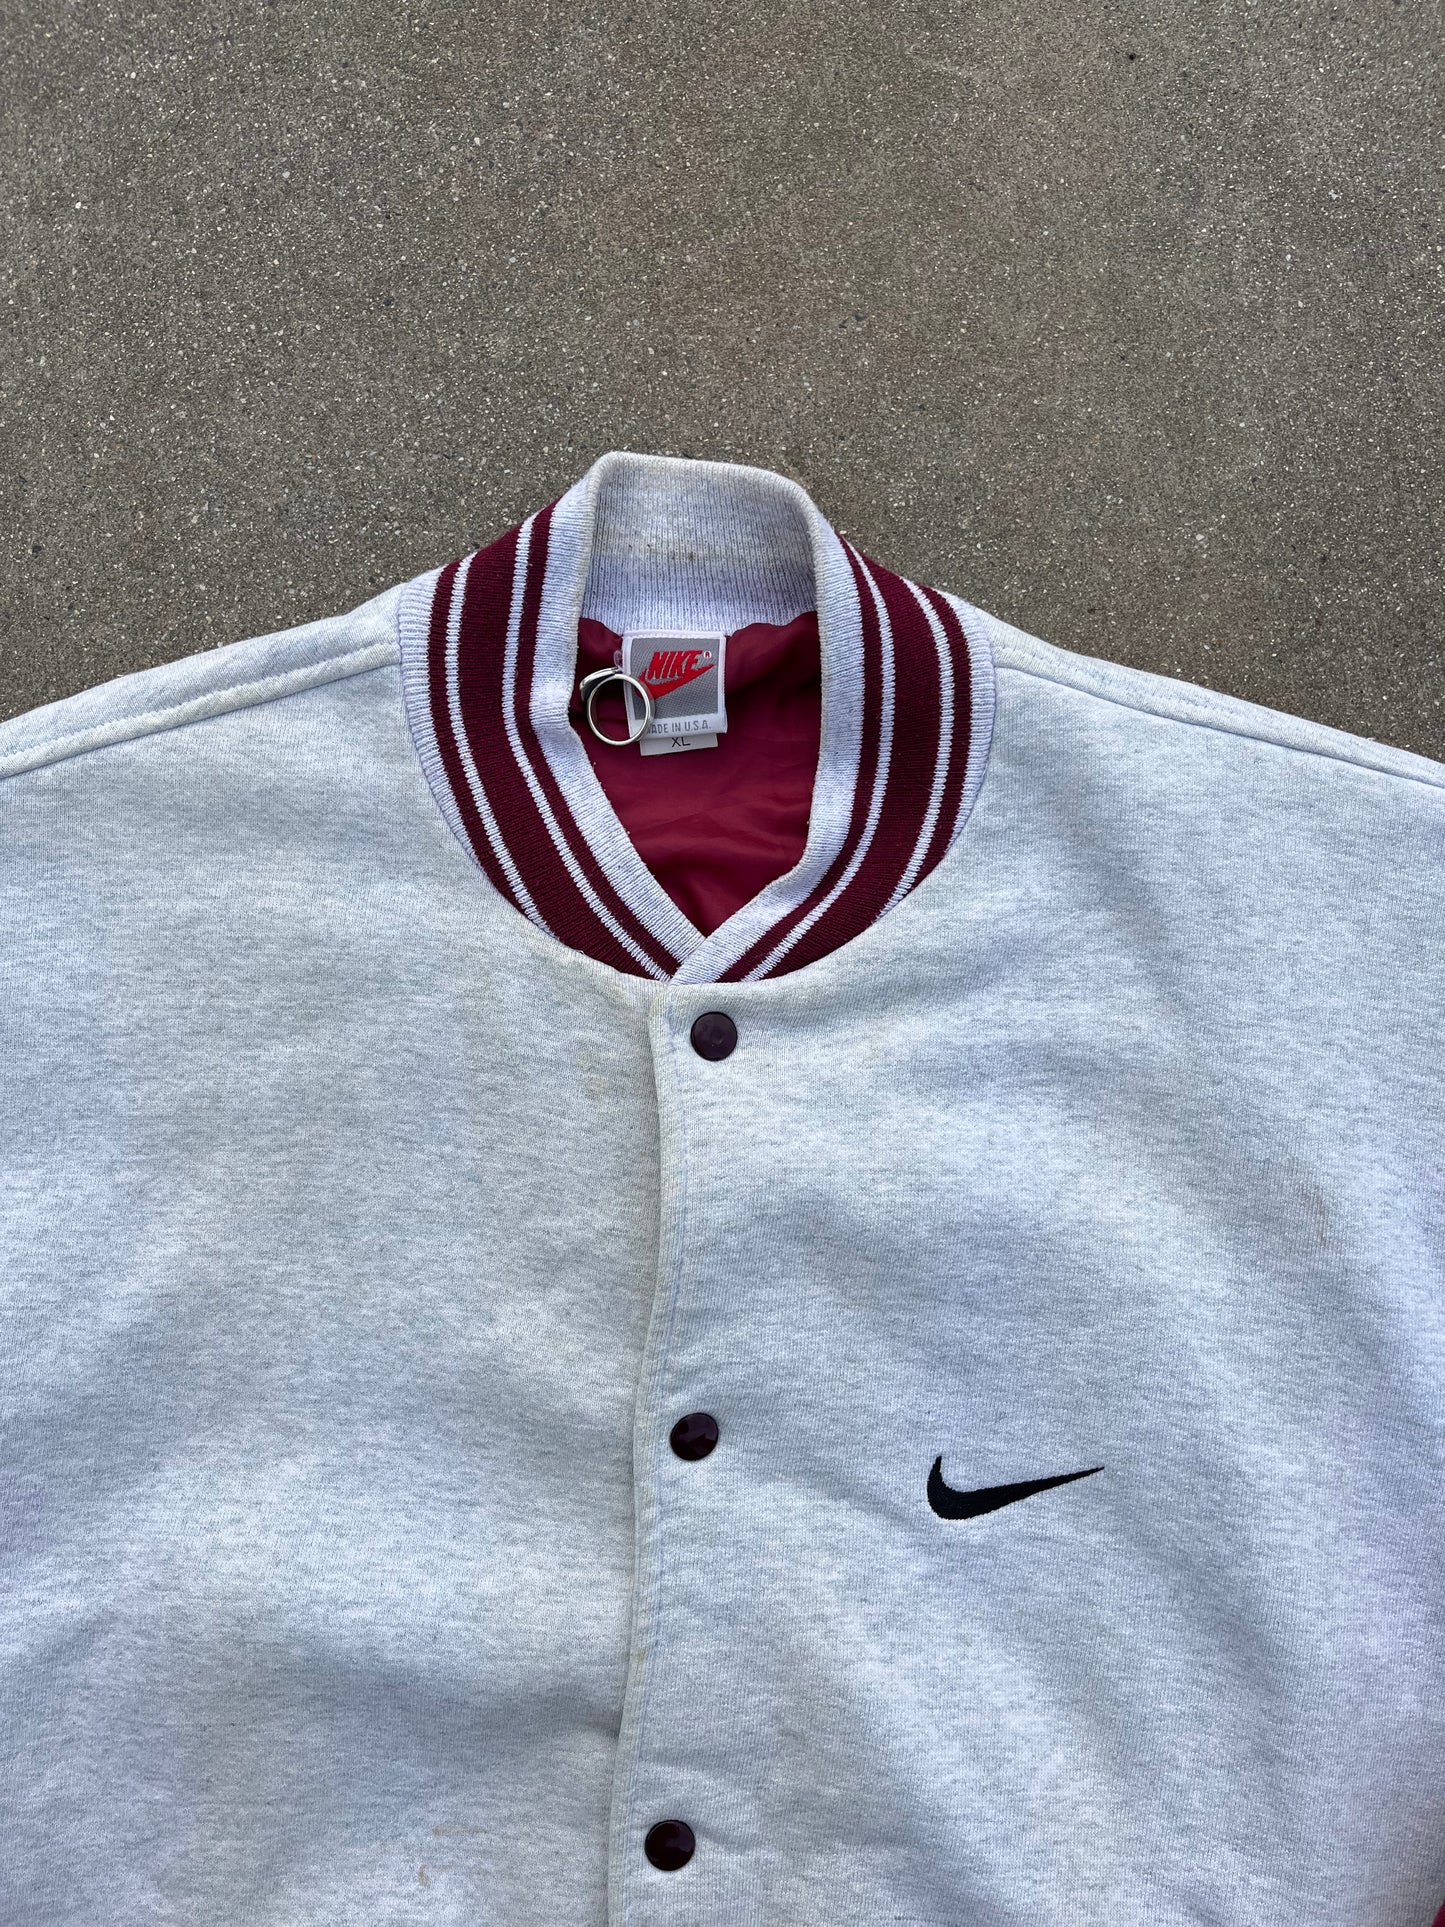 Vintage Nike College jacket